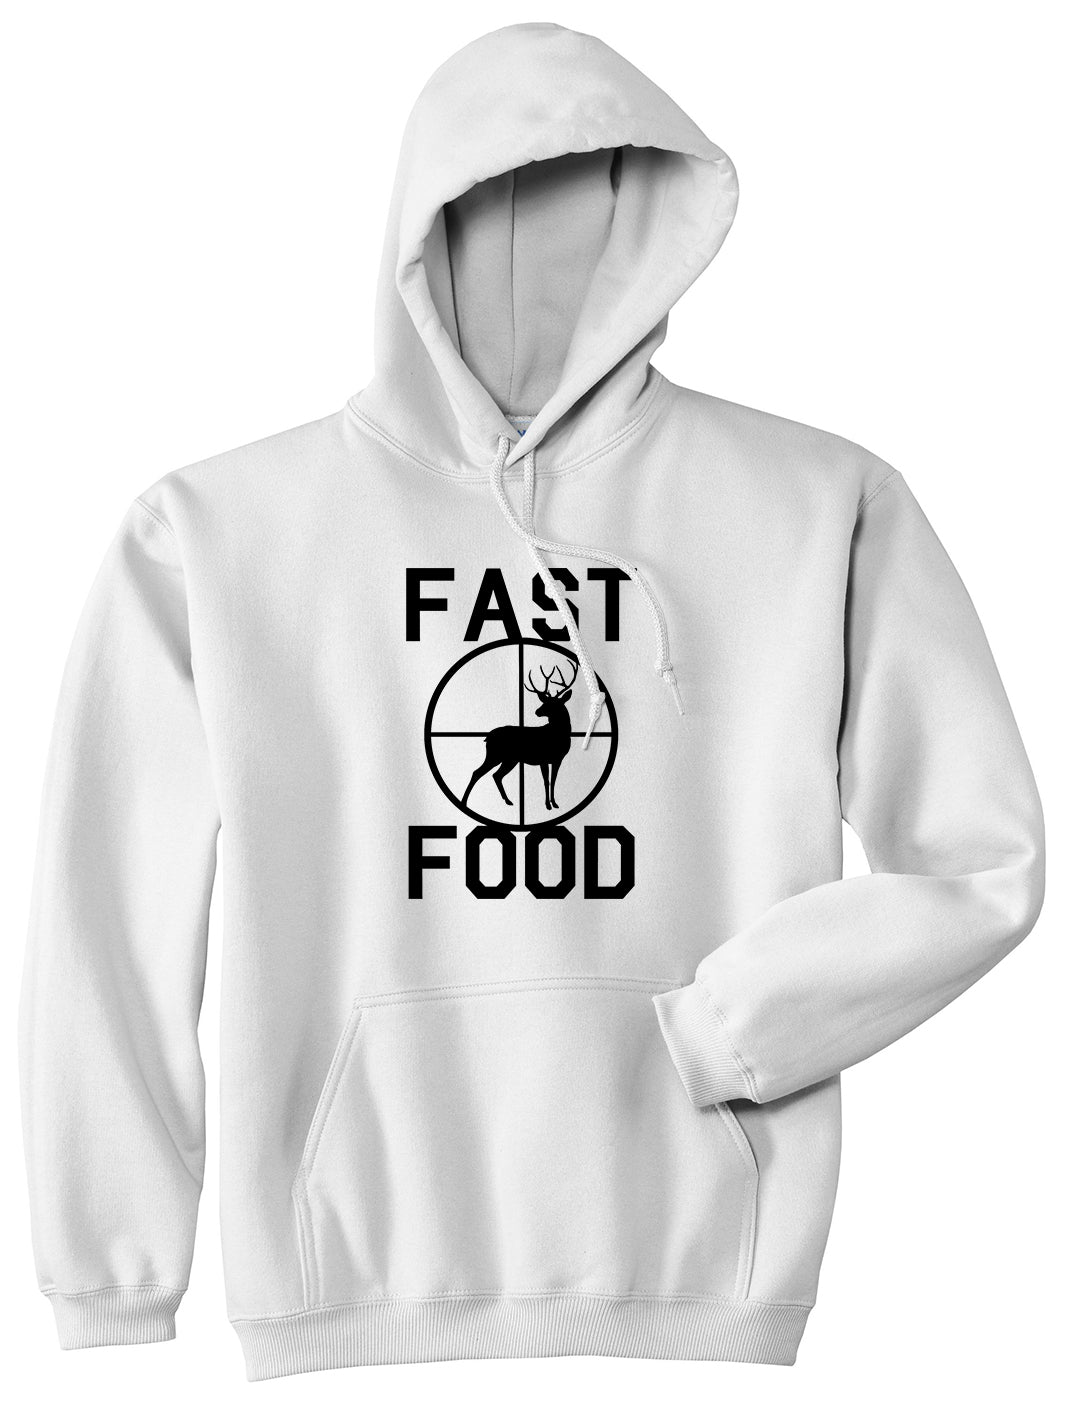 Fast Food Deer Hunting Mens White Pullover Hoodie by KINGS OF NY